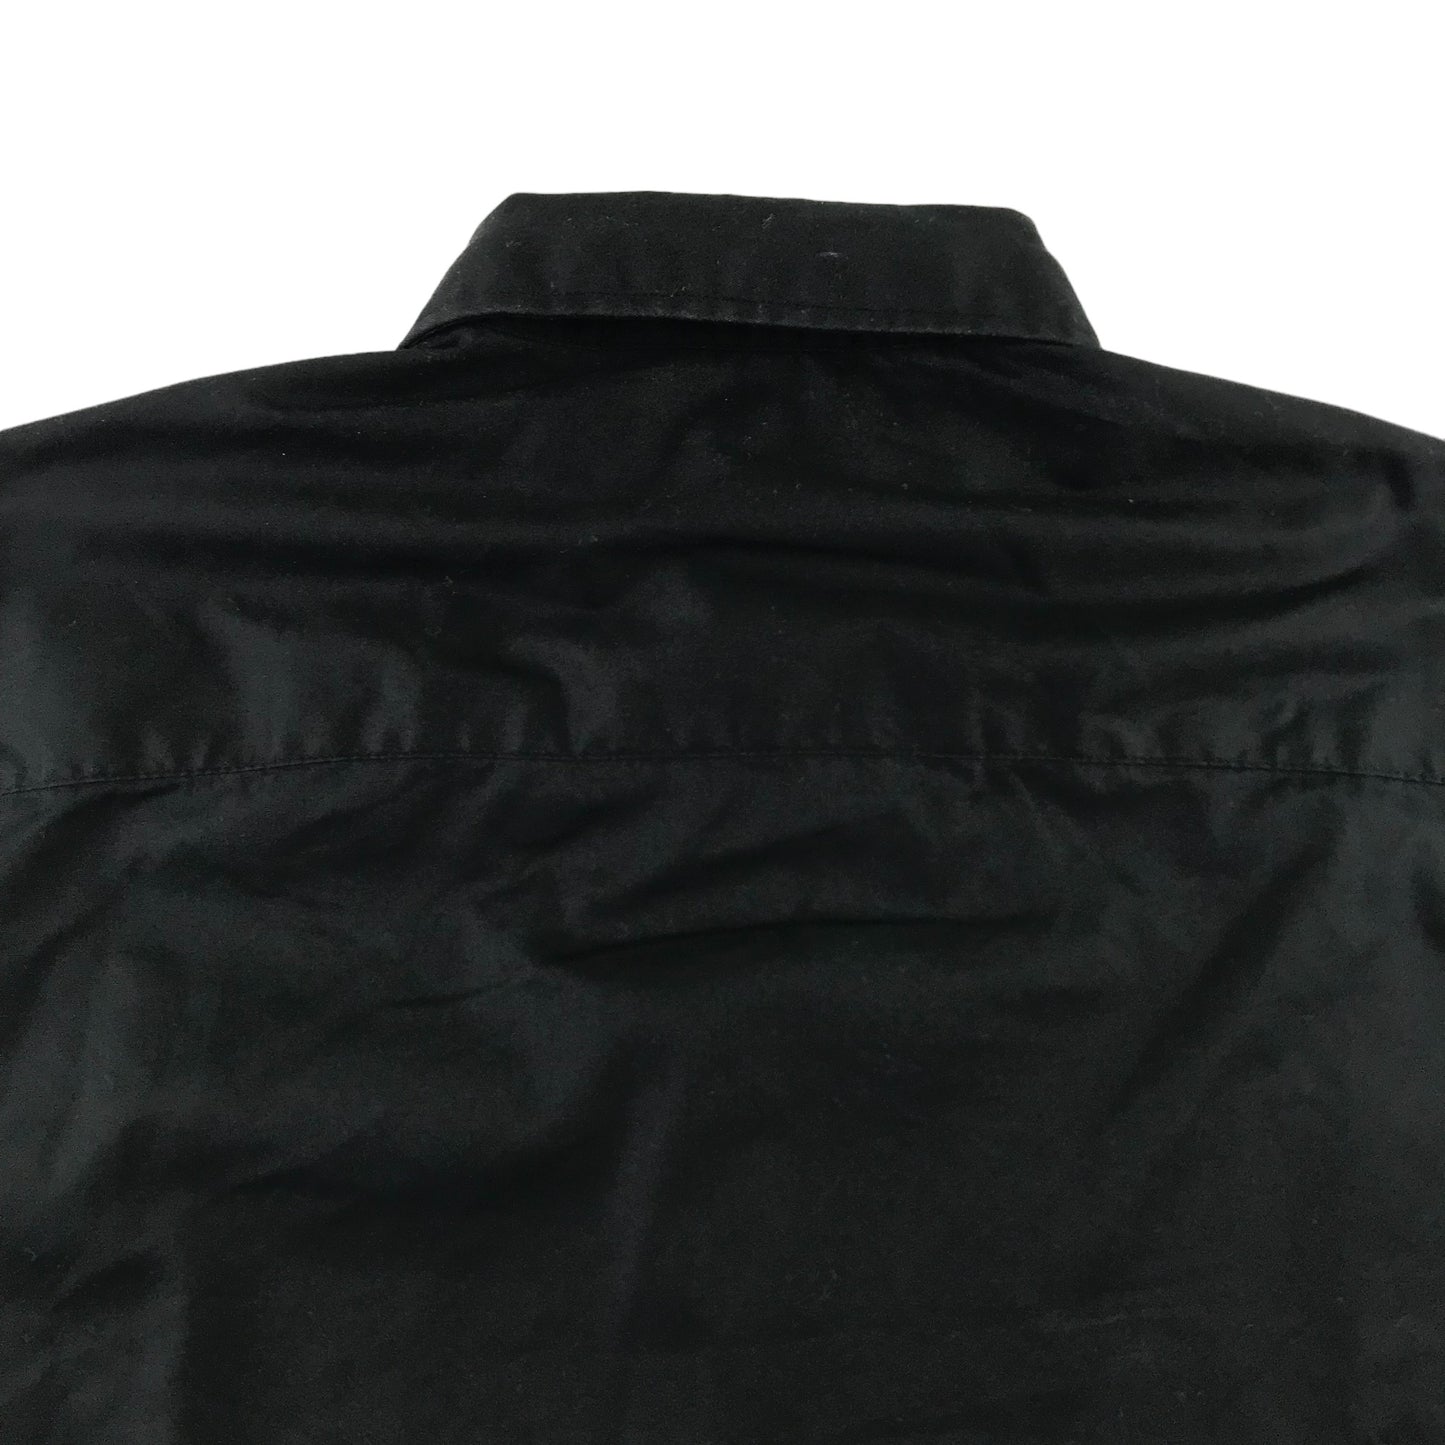 Black Shirt Mens Small Black Plain Pattern Short Sleeve Button Up